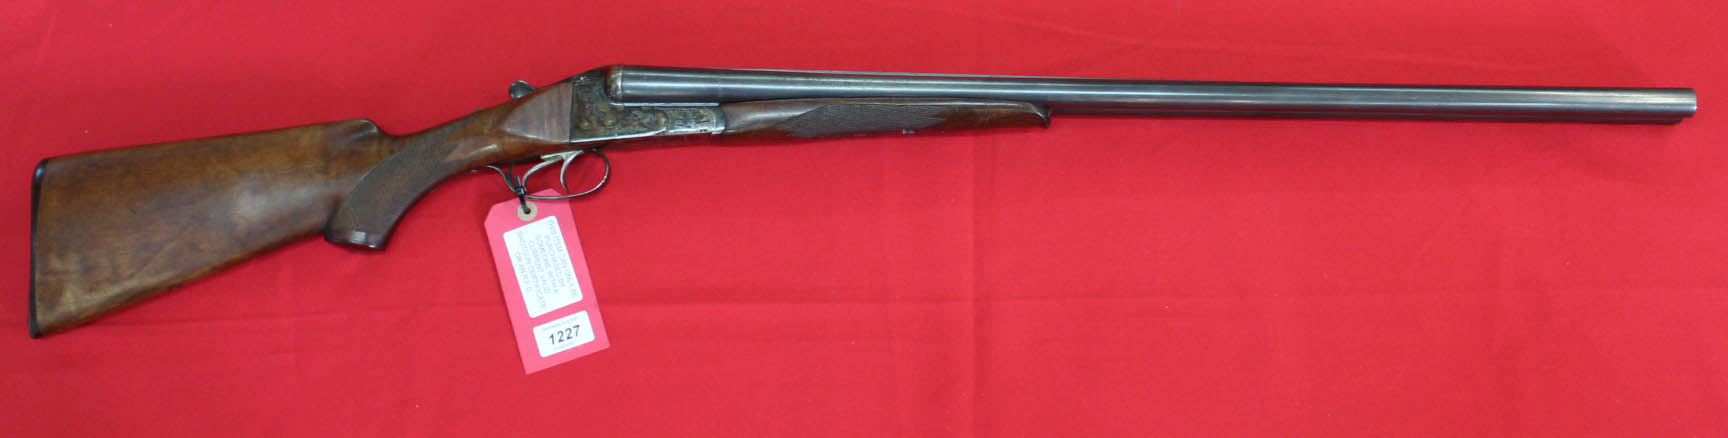 A 12 bore S/S B/L/E shotgun by Baikal (2 3/4 Magnum ejector), S/No.